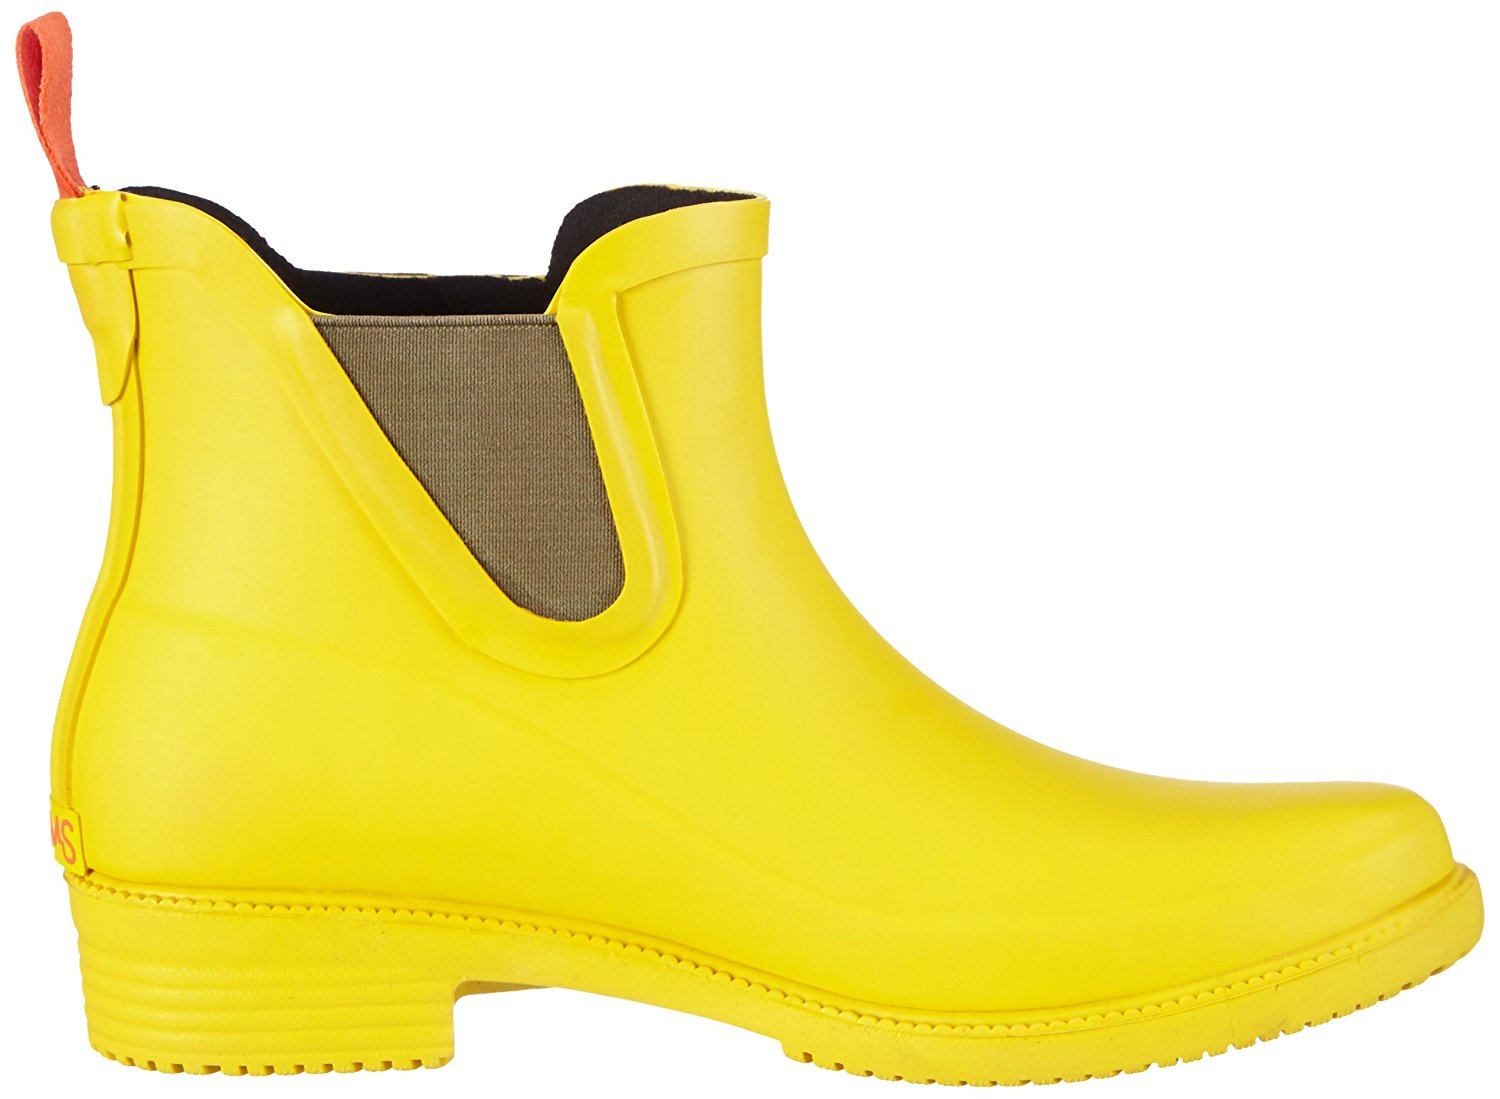 Swims Shoes Swims 22108-5 Women's Dora Rain Boots, Yellow, 7 M US